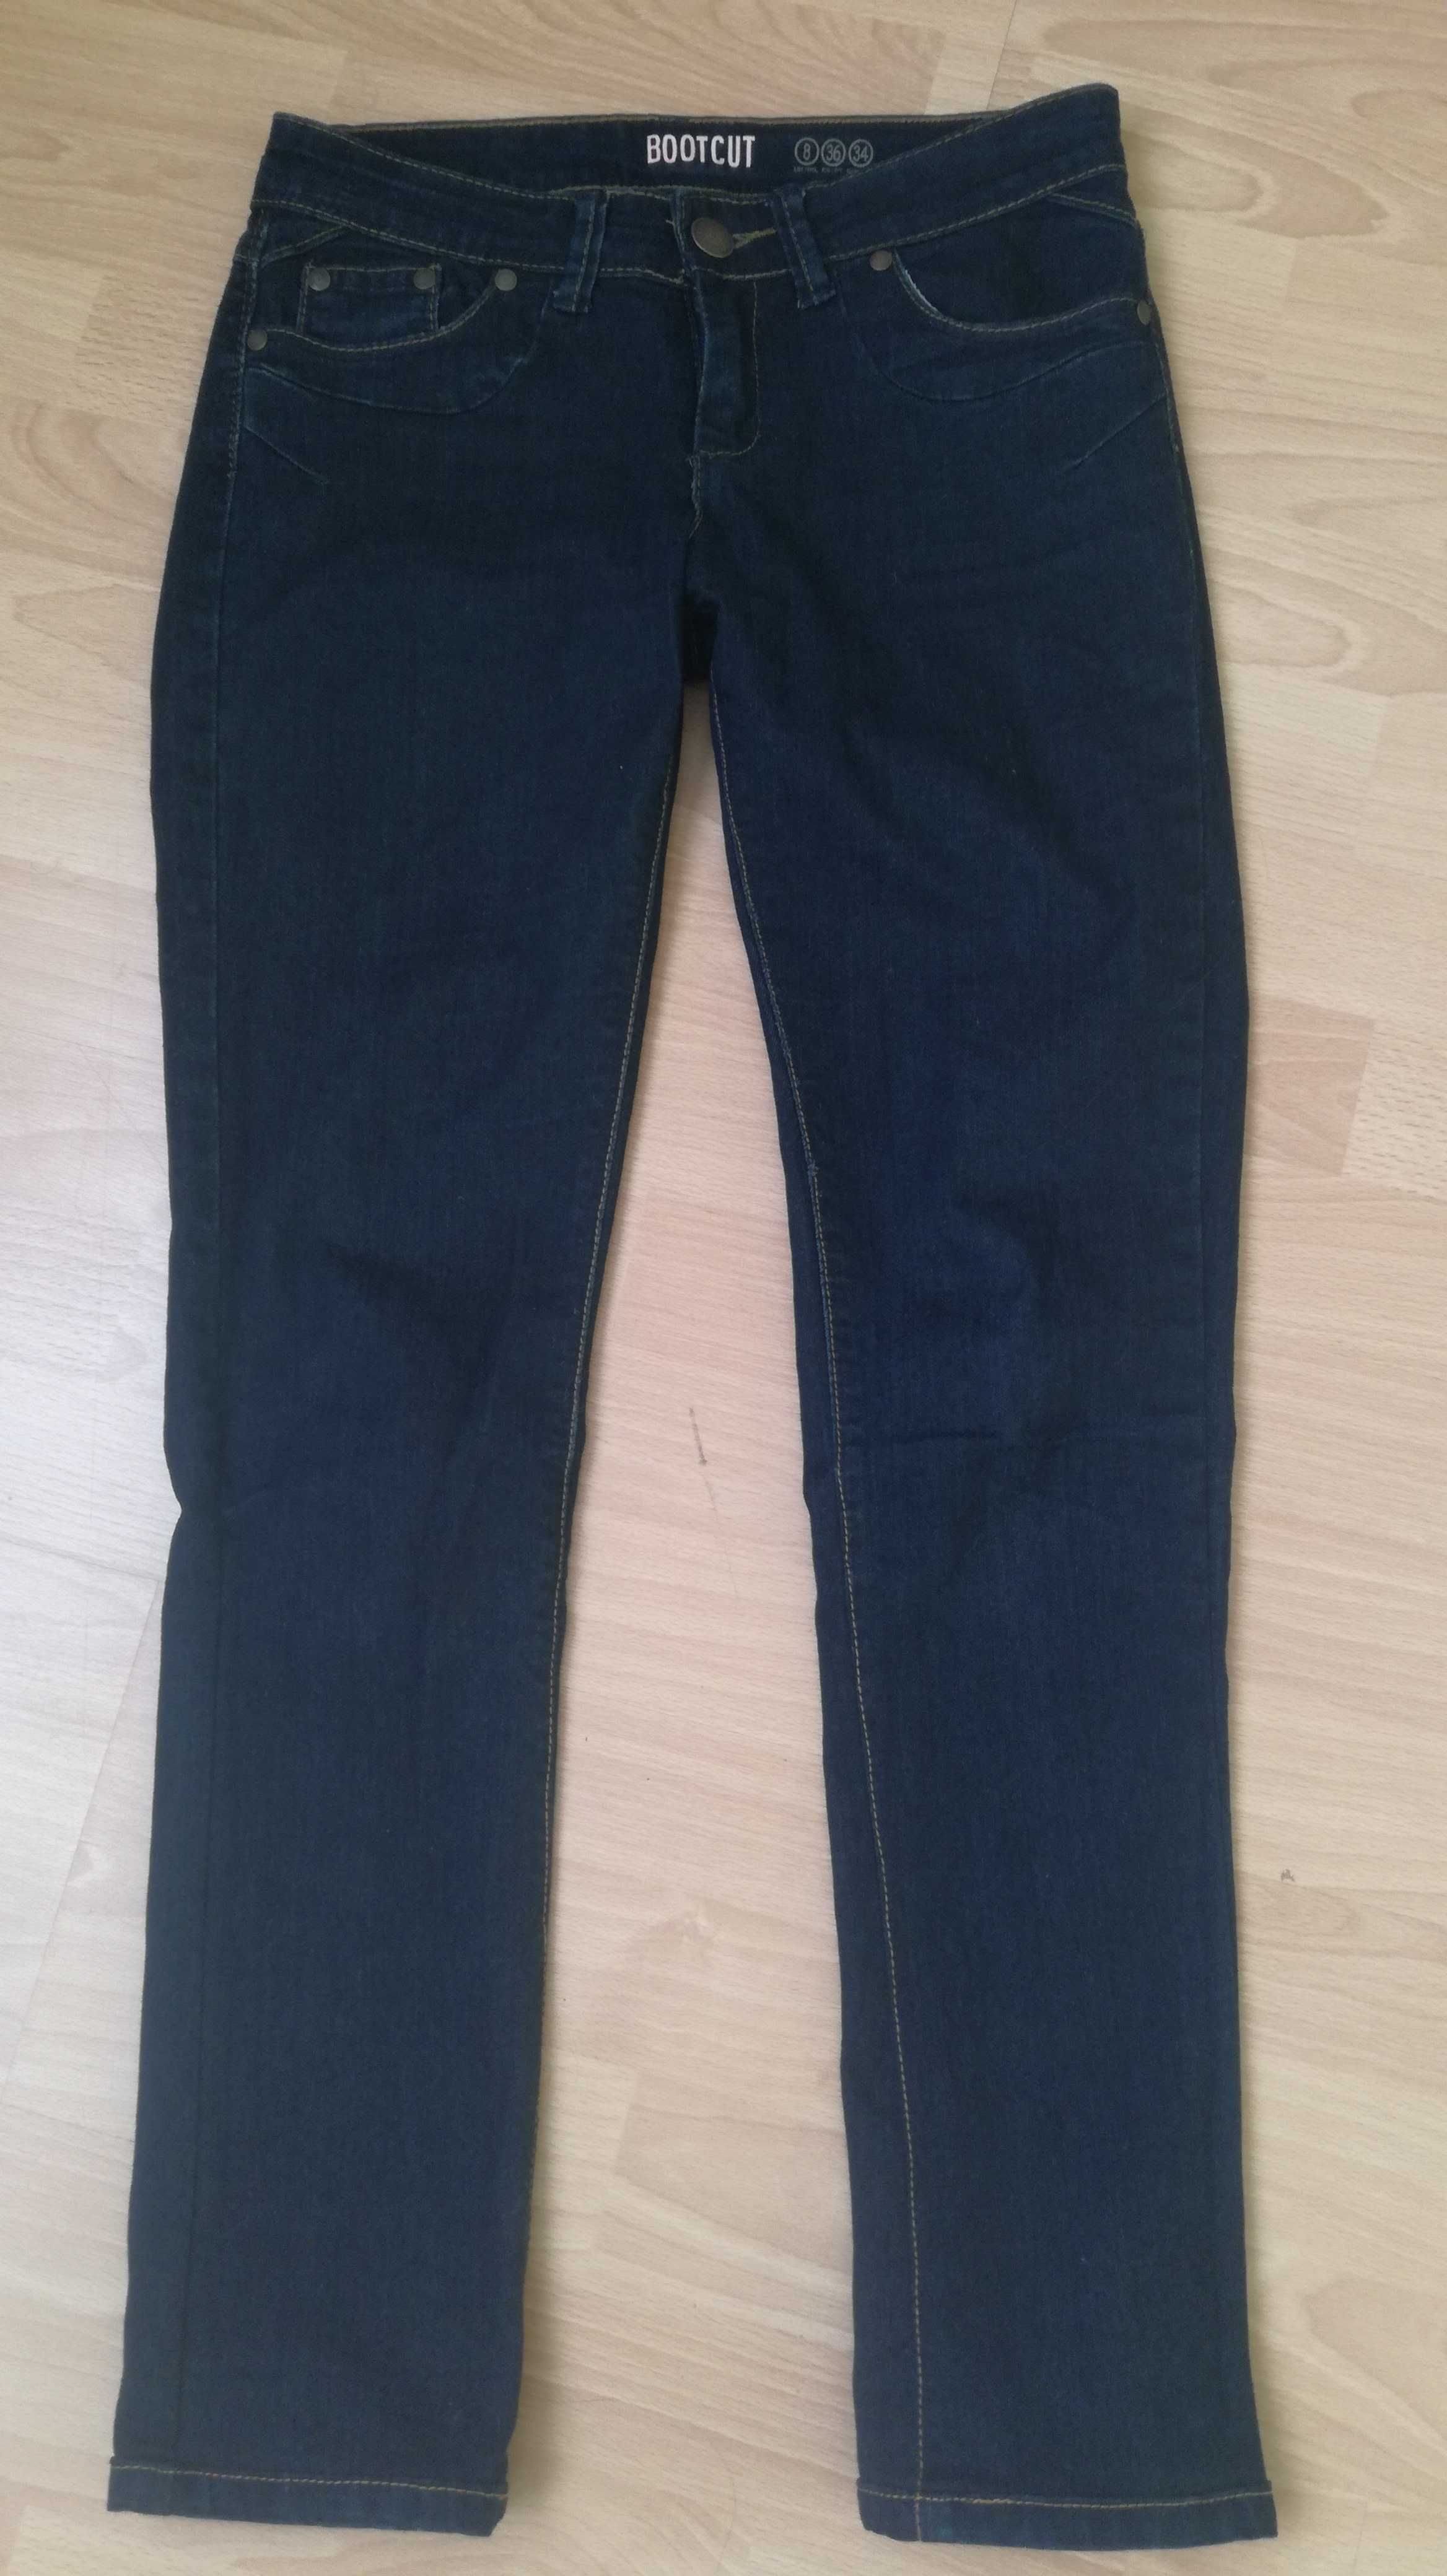 Spodnie jeansy H&M kol. granat XS/34, S/36